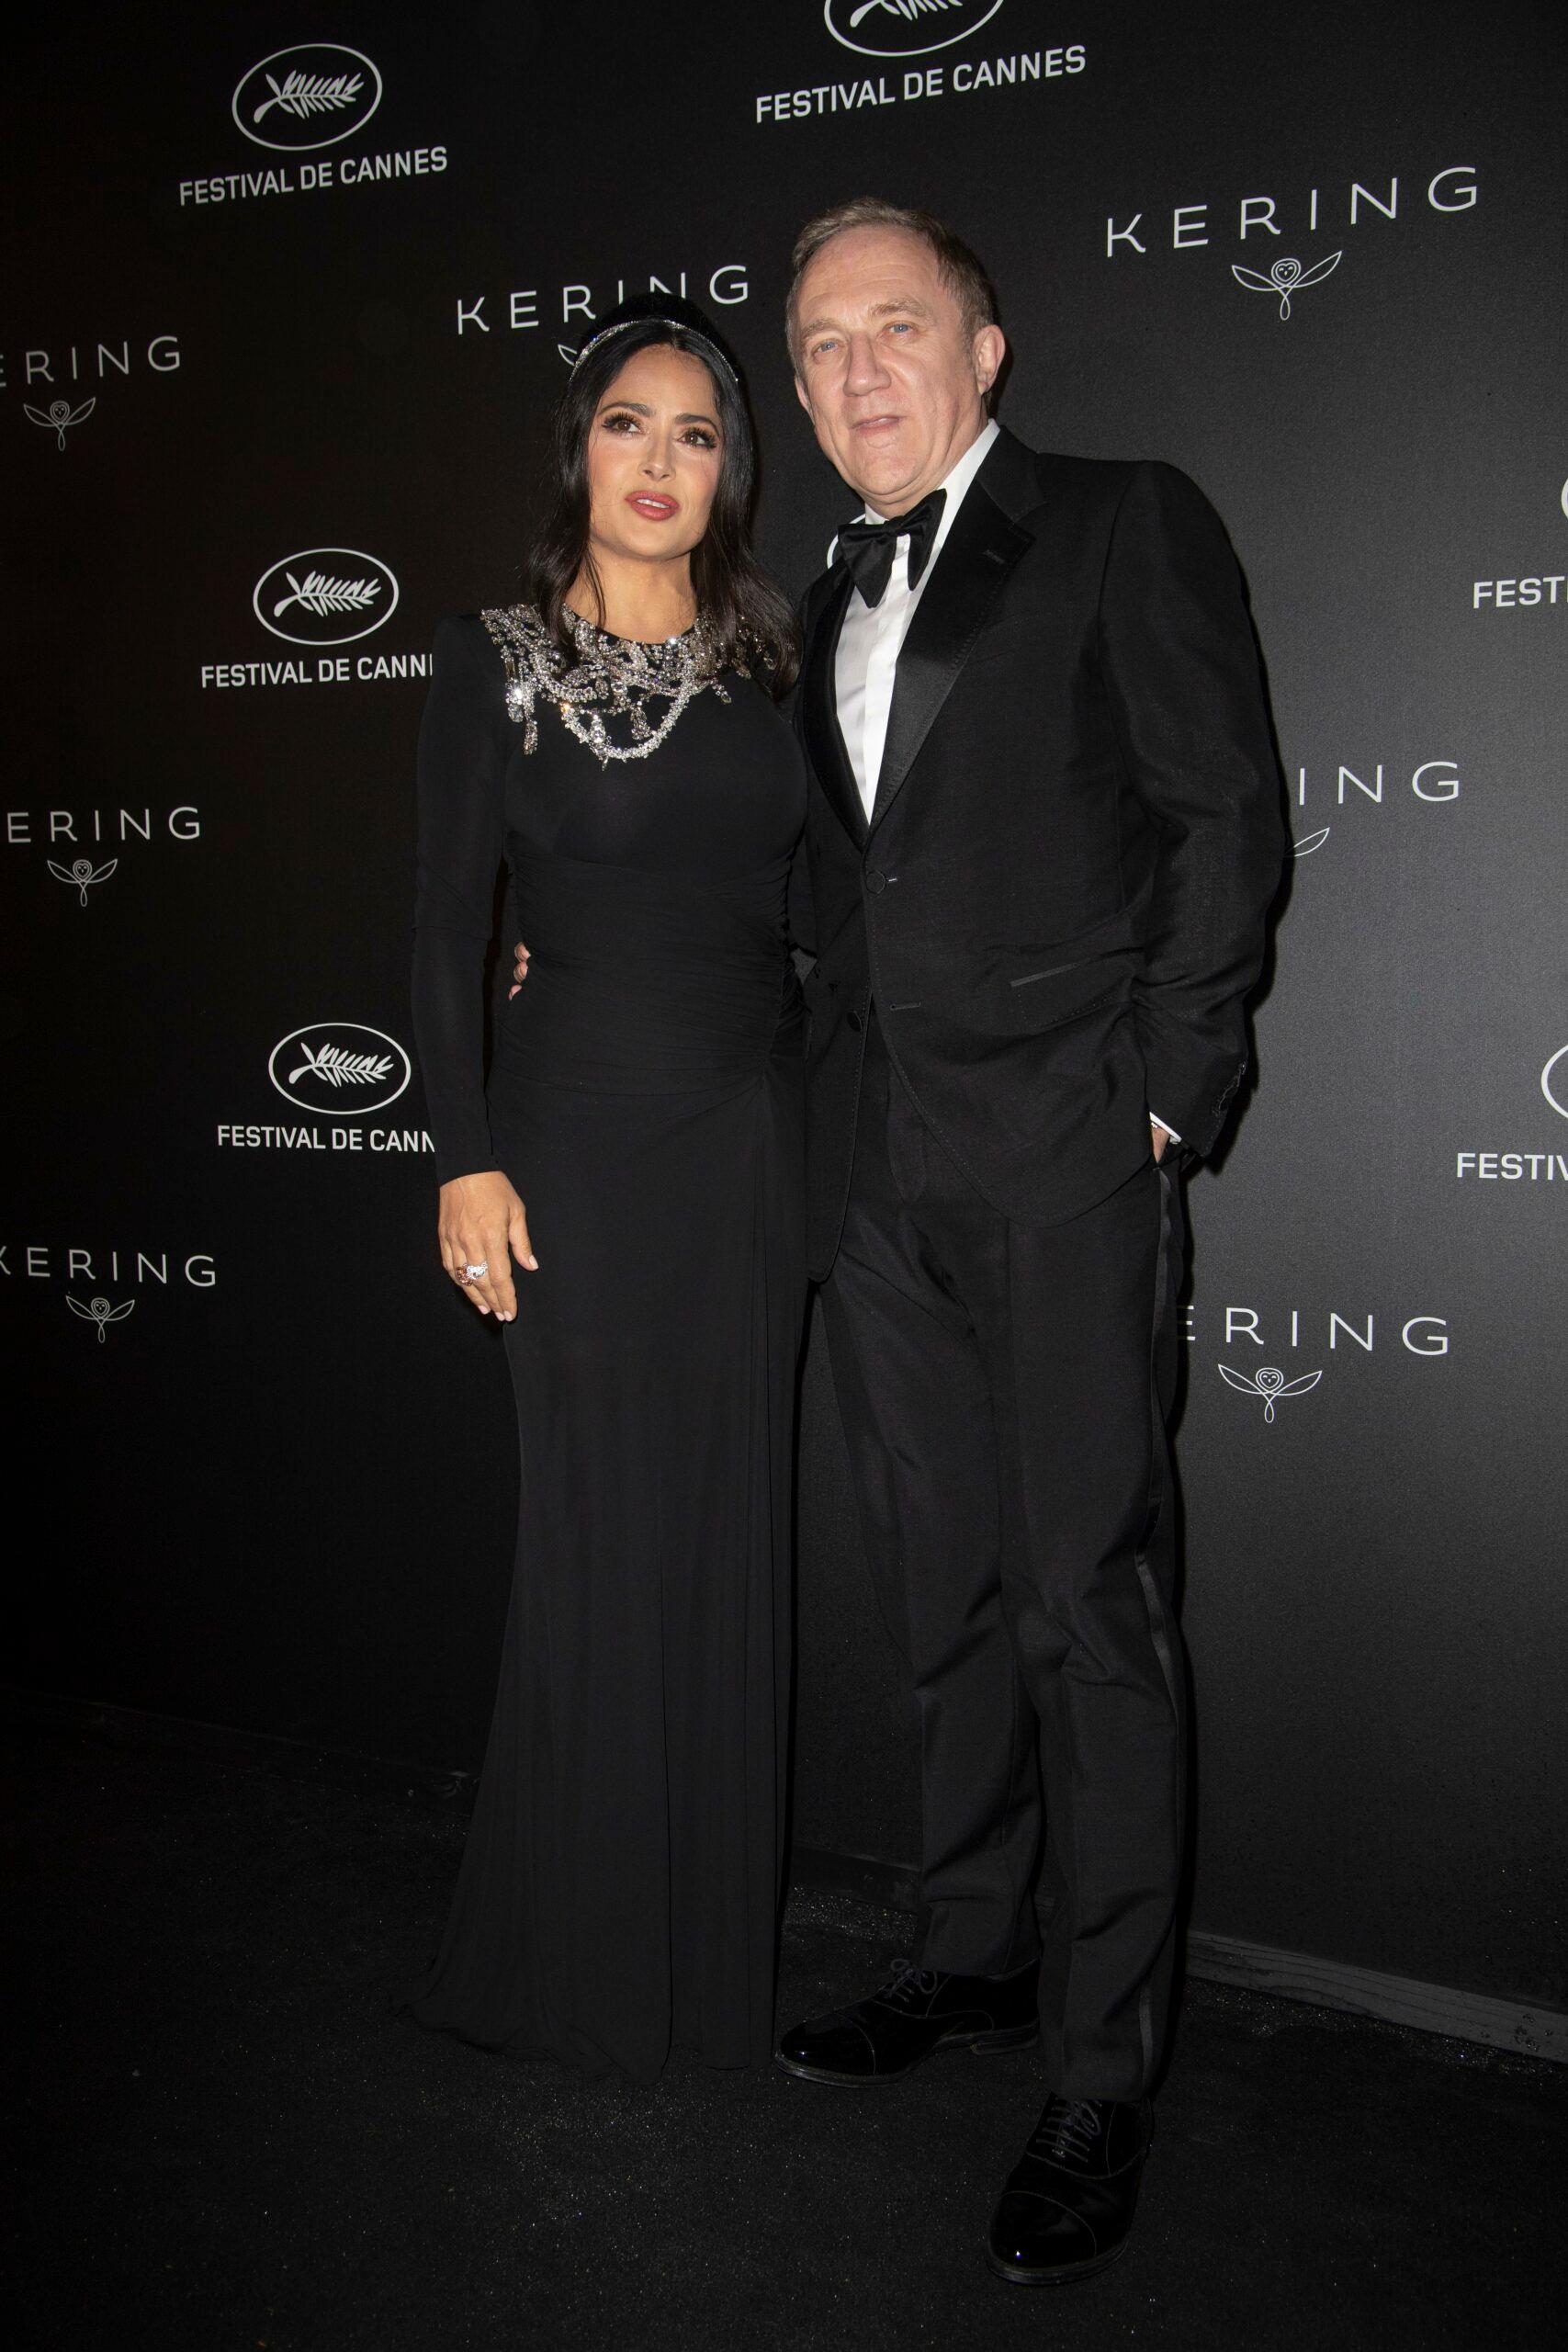 Salma Hayek and Francois-Henri Pinault arrive at the Kering and Cannes Film Festival Official Dinner at Place de la Castre